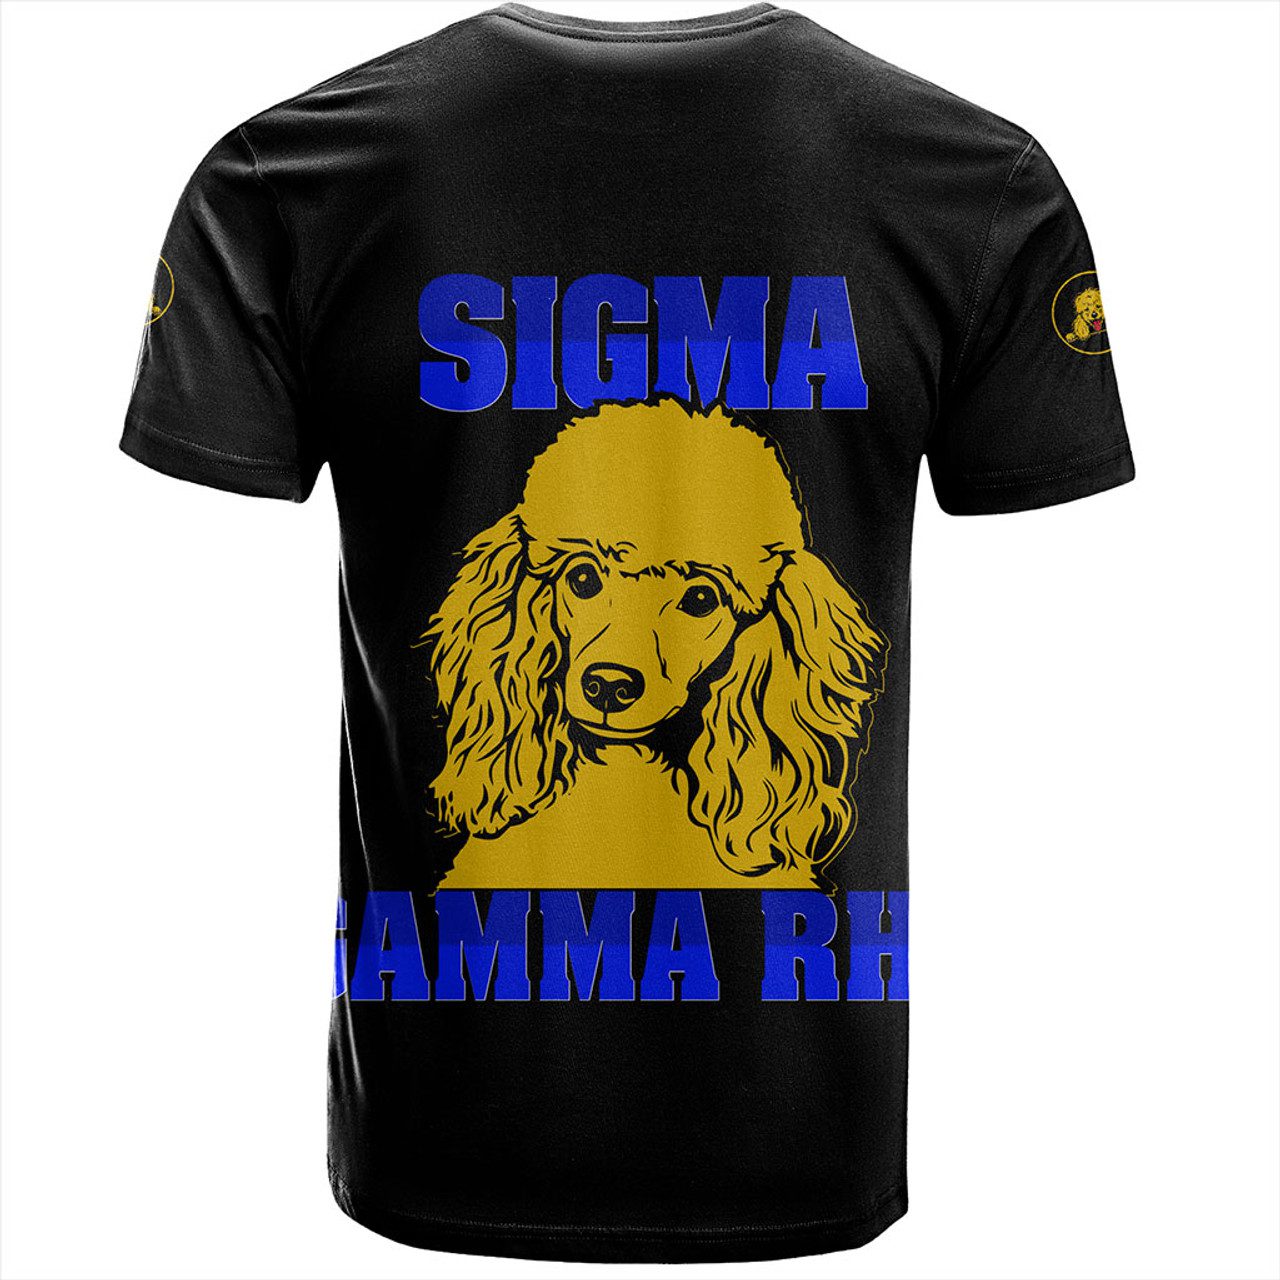 Sigma Gamma Rho T-Shirt Letter